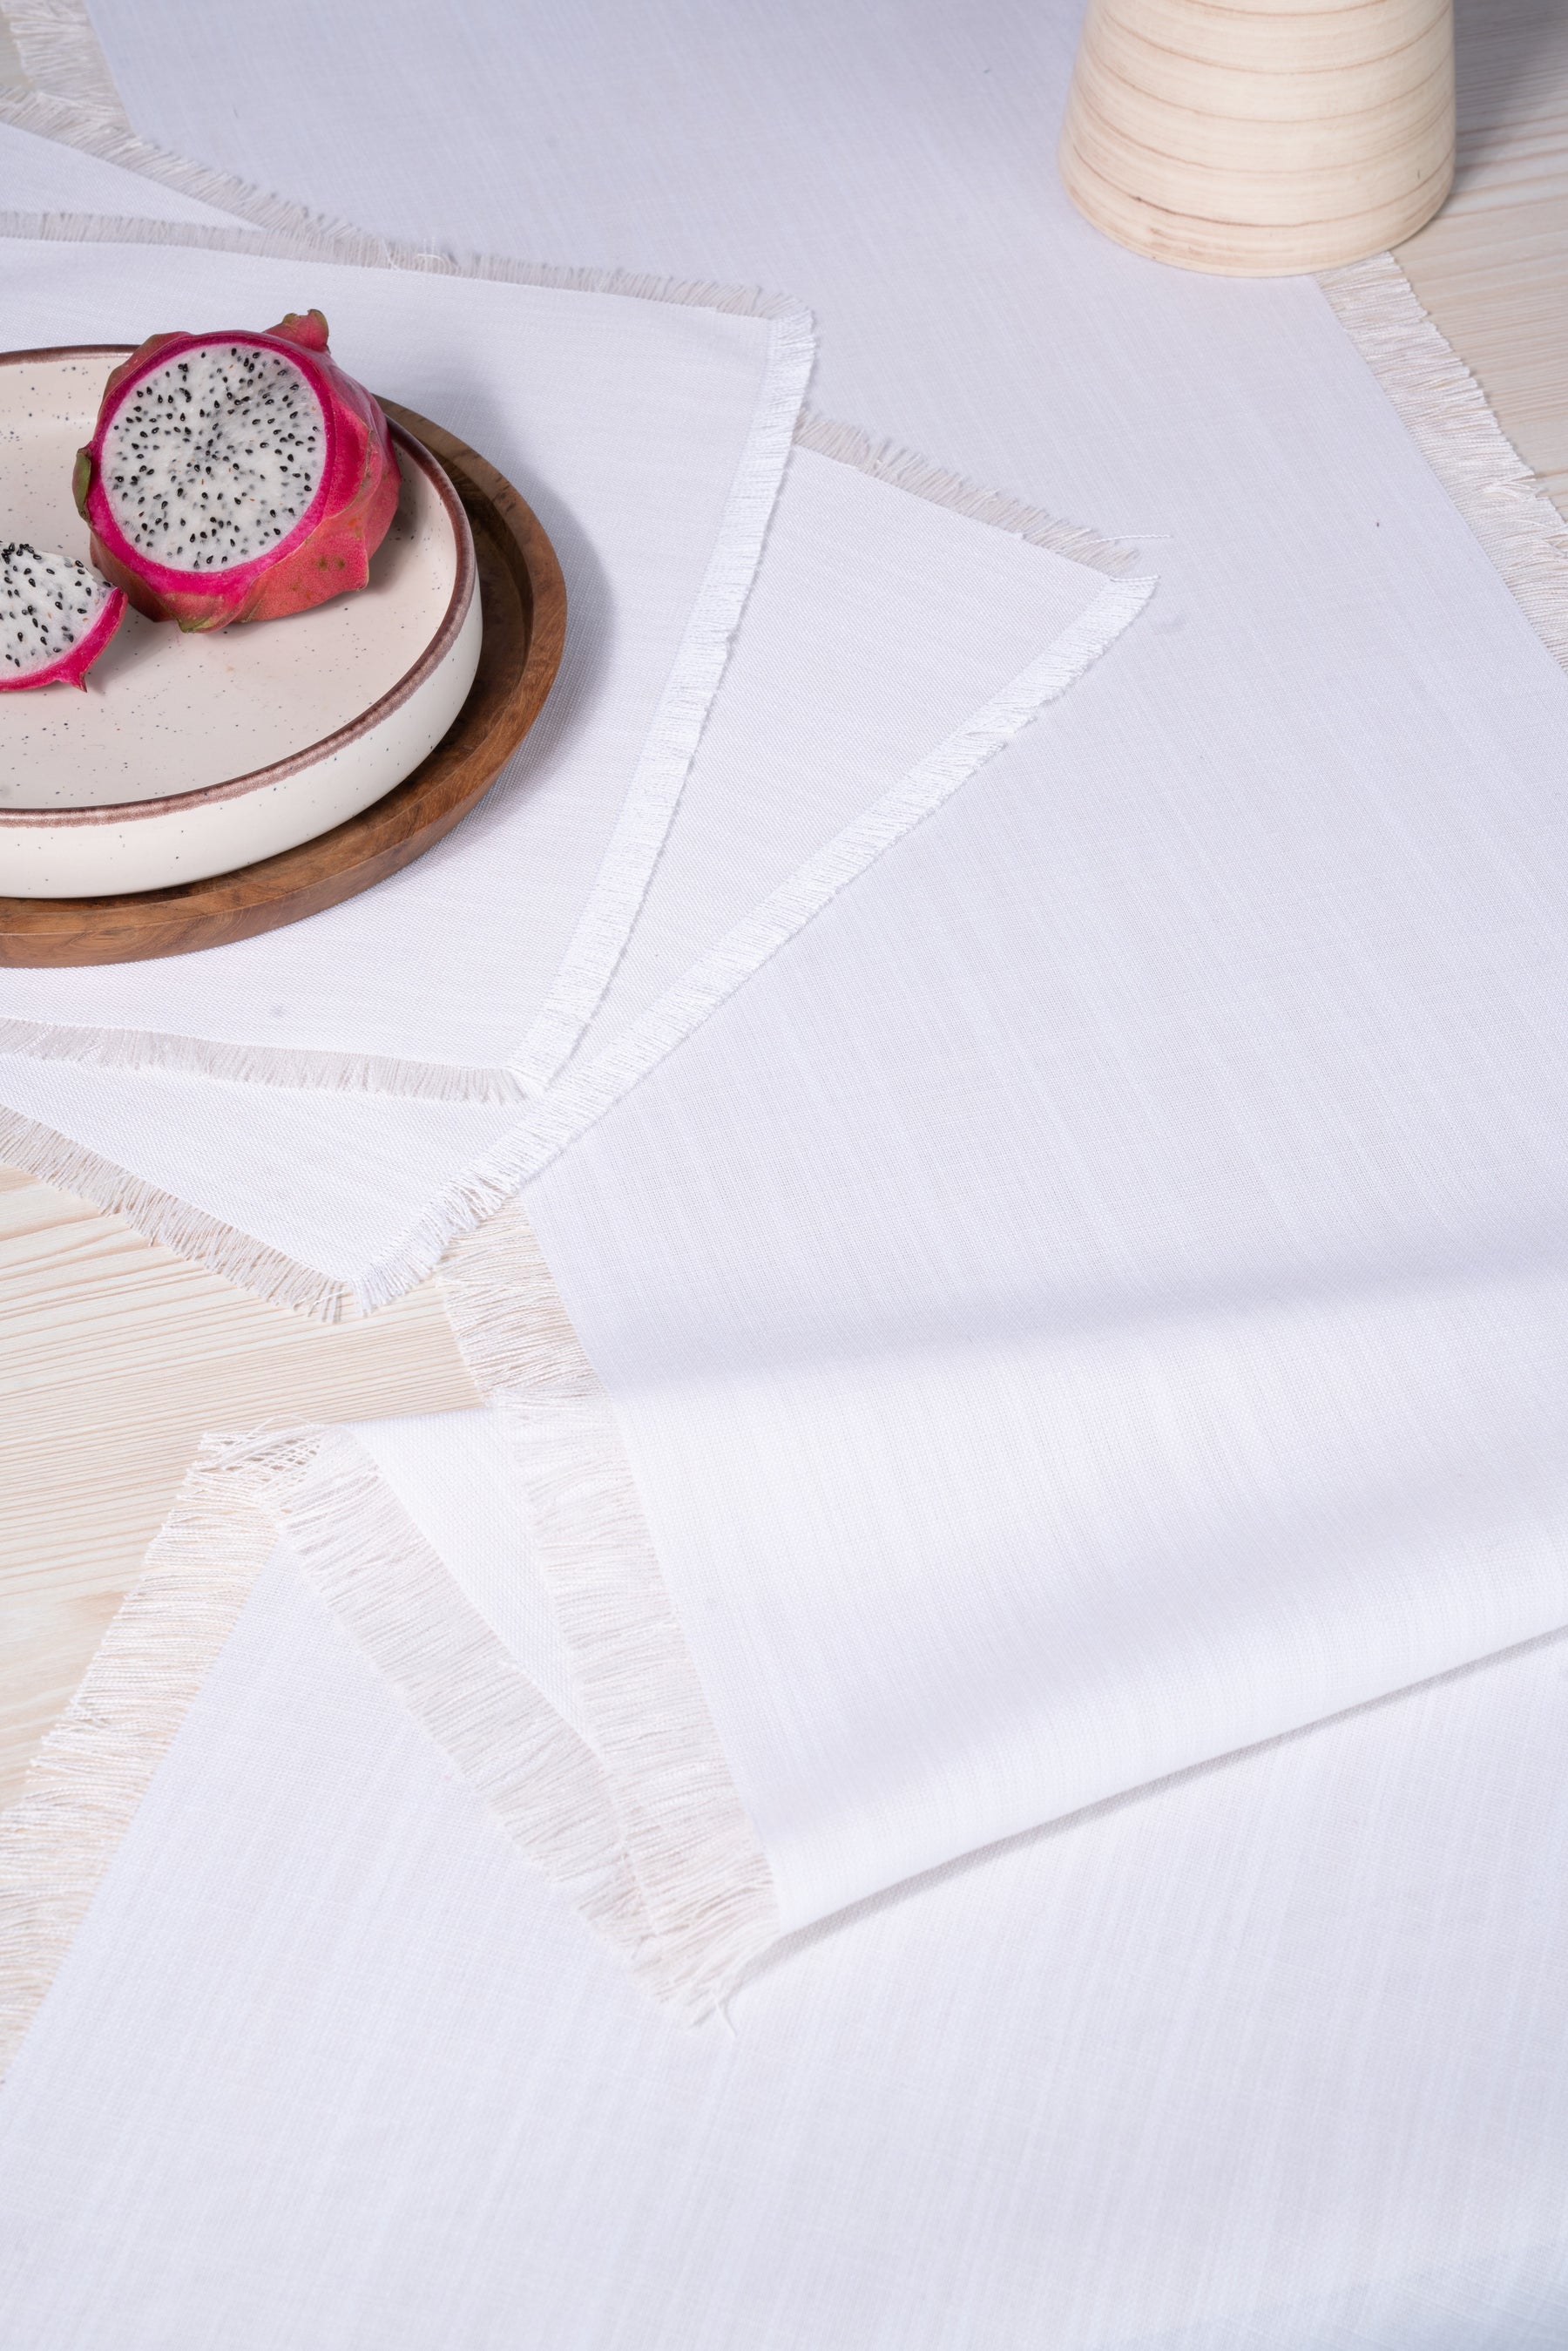 Chambray Cream and White Linen Textured Table Runner - Fringe